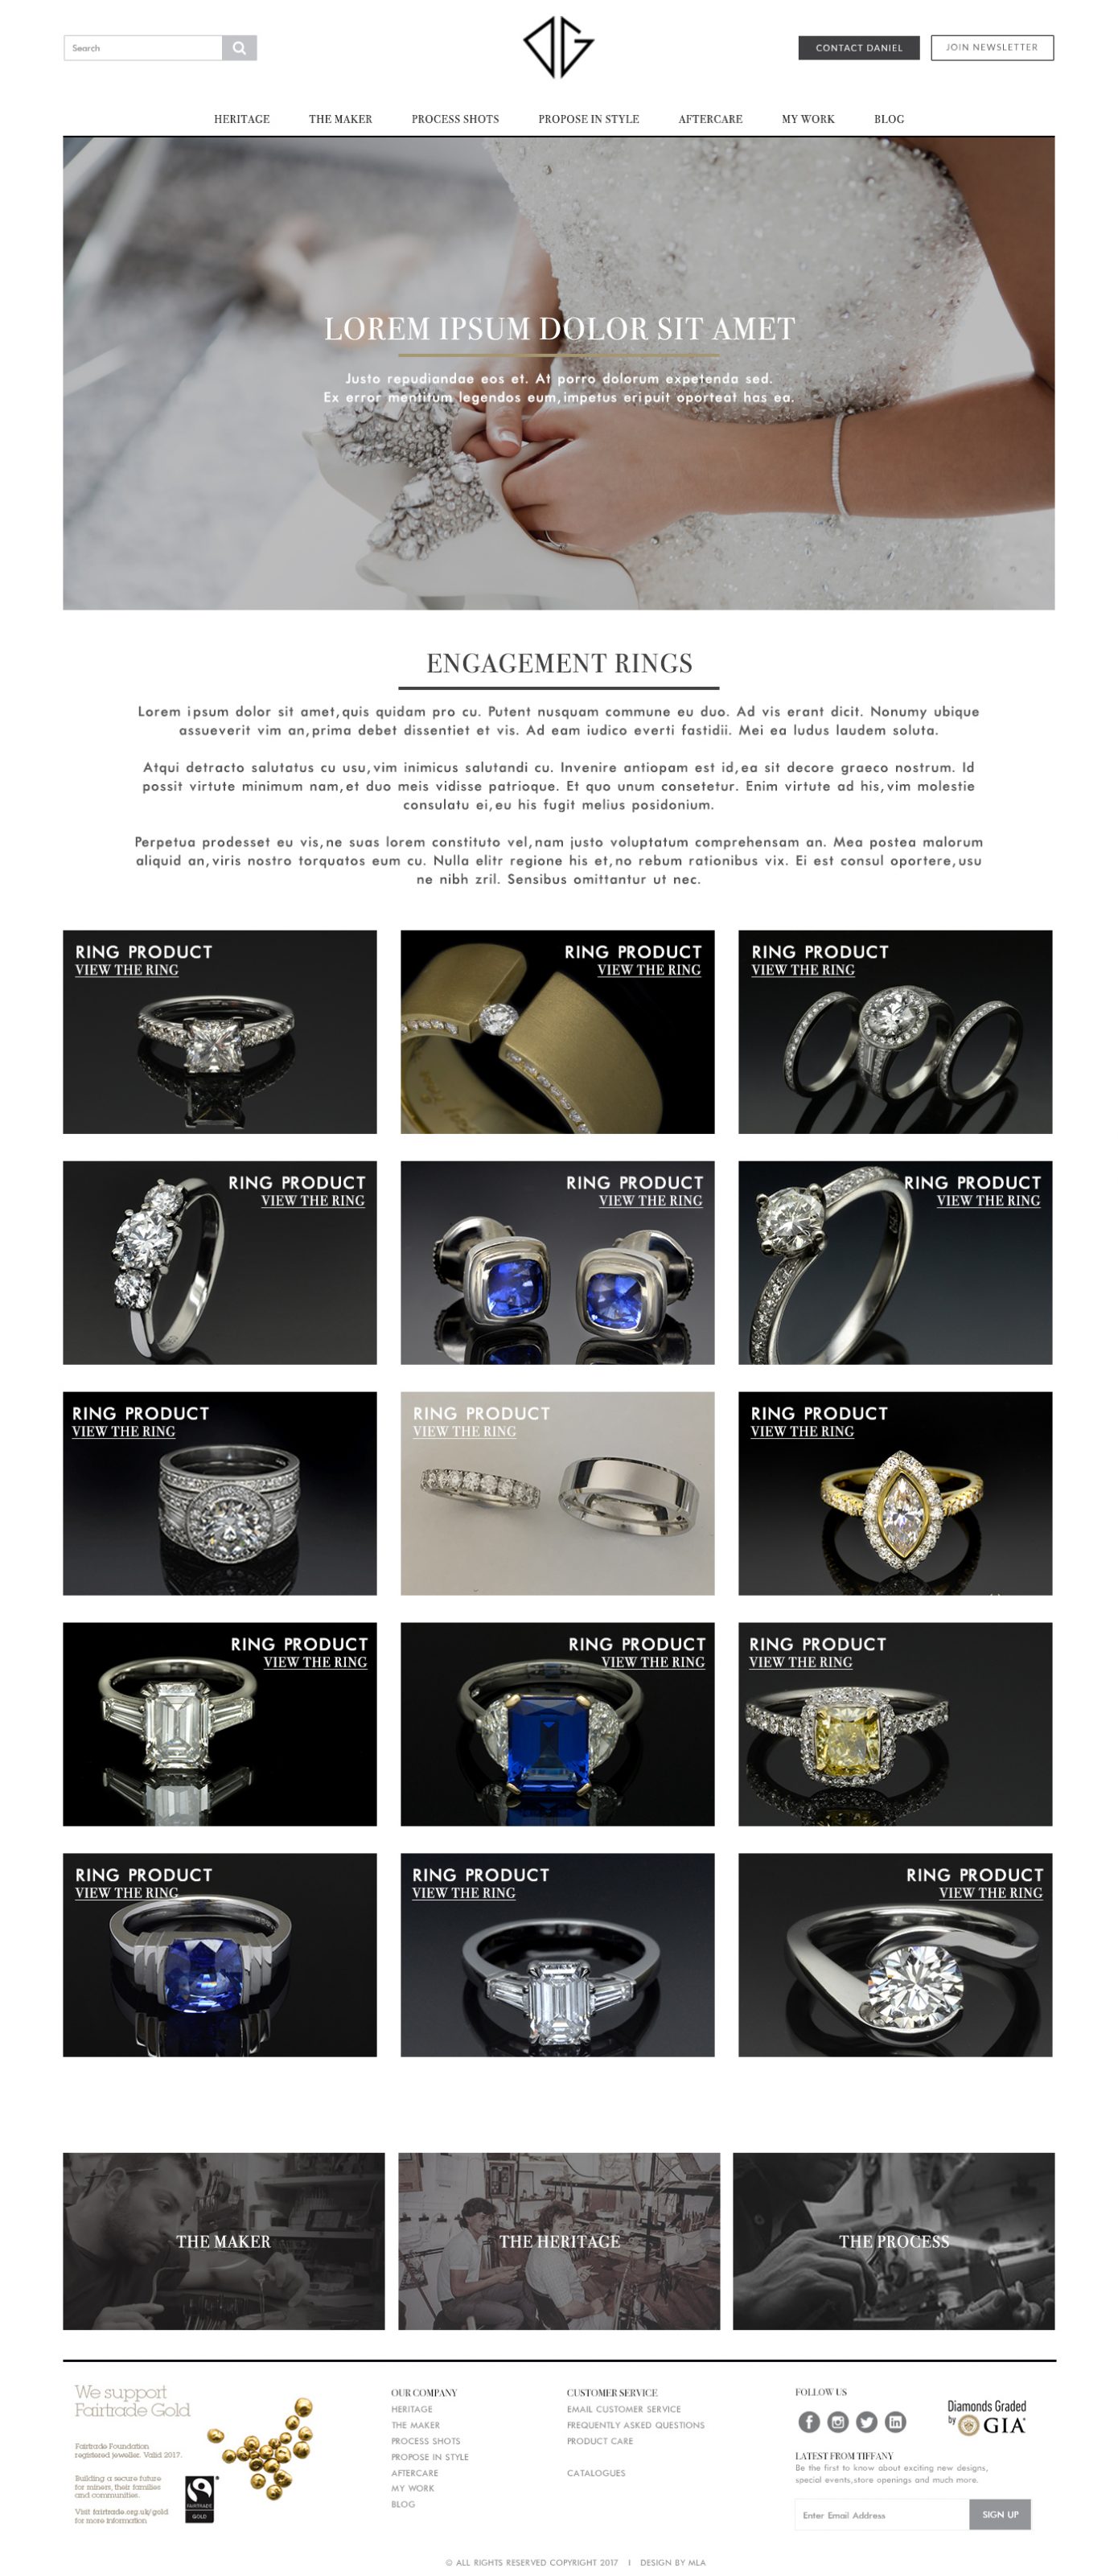 Dg bespoke jewellery engagement rings design - Website design London - web design agency london